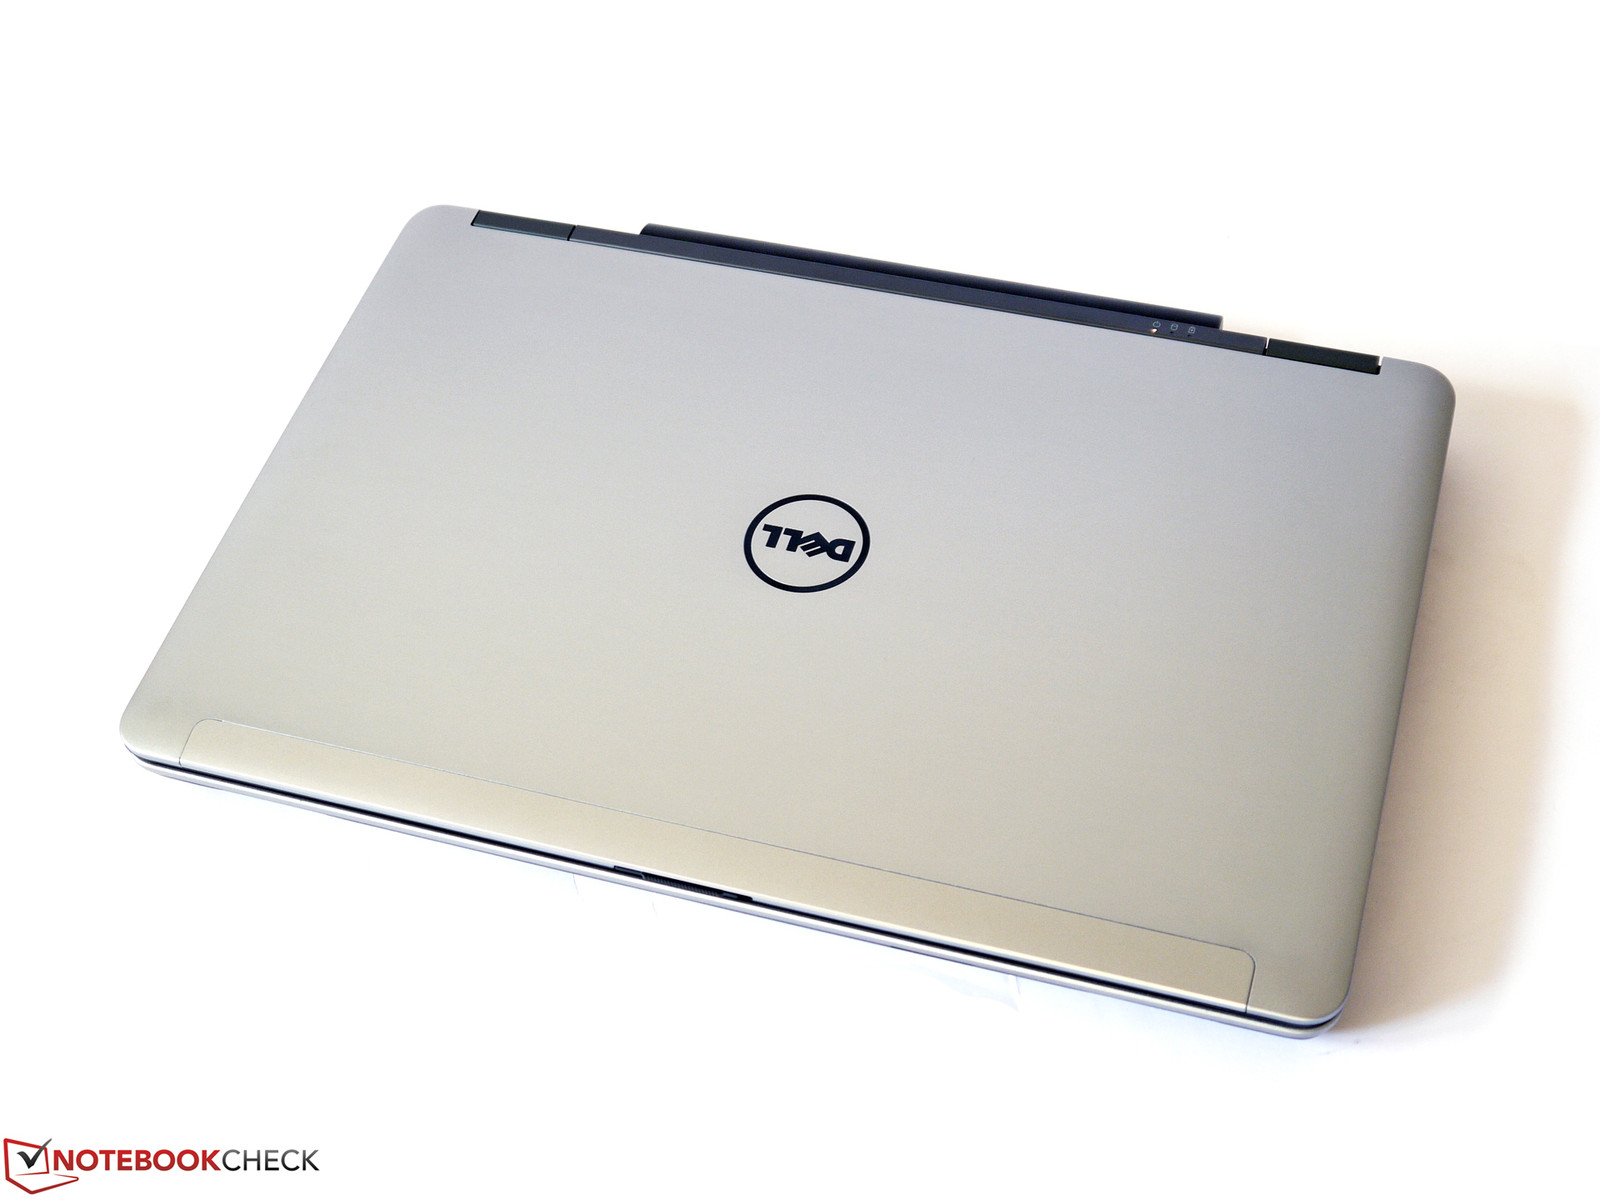 Kort Testrapport Dell Precision M2800 Notebook Notebookcheck Nl